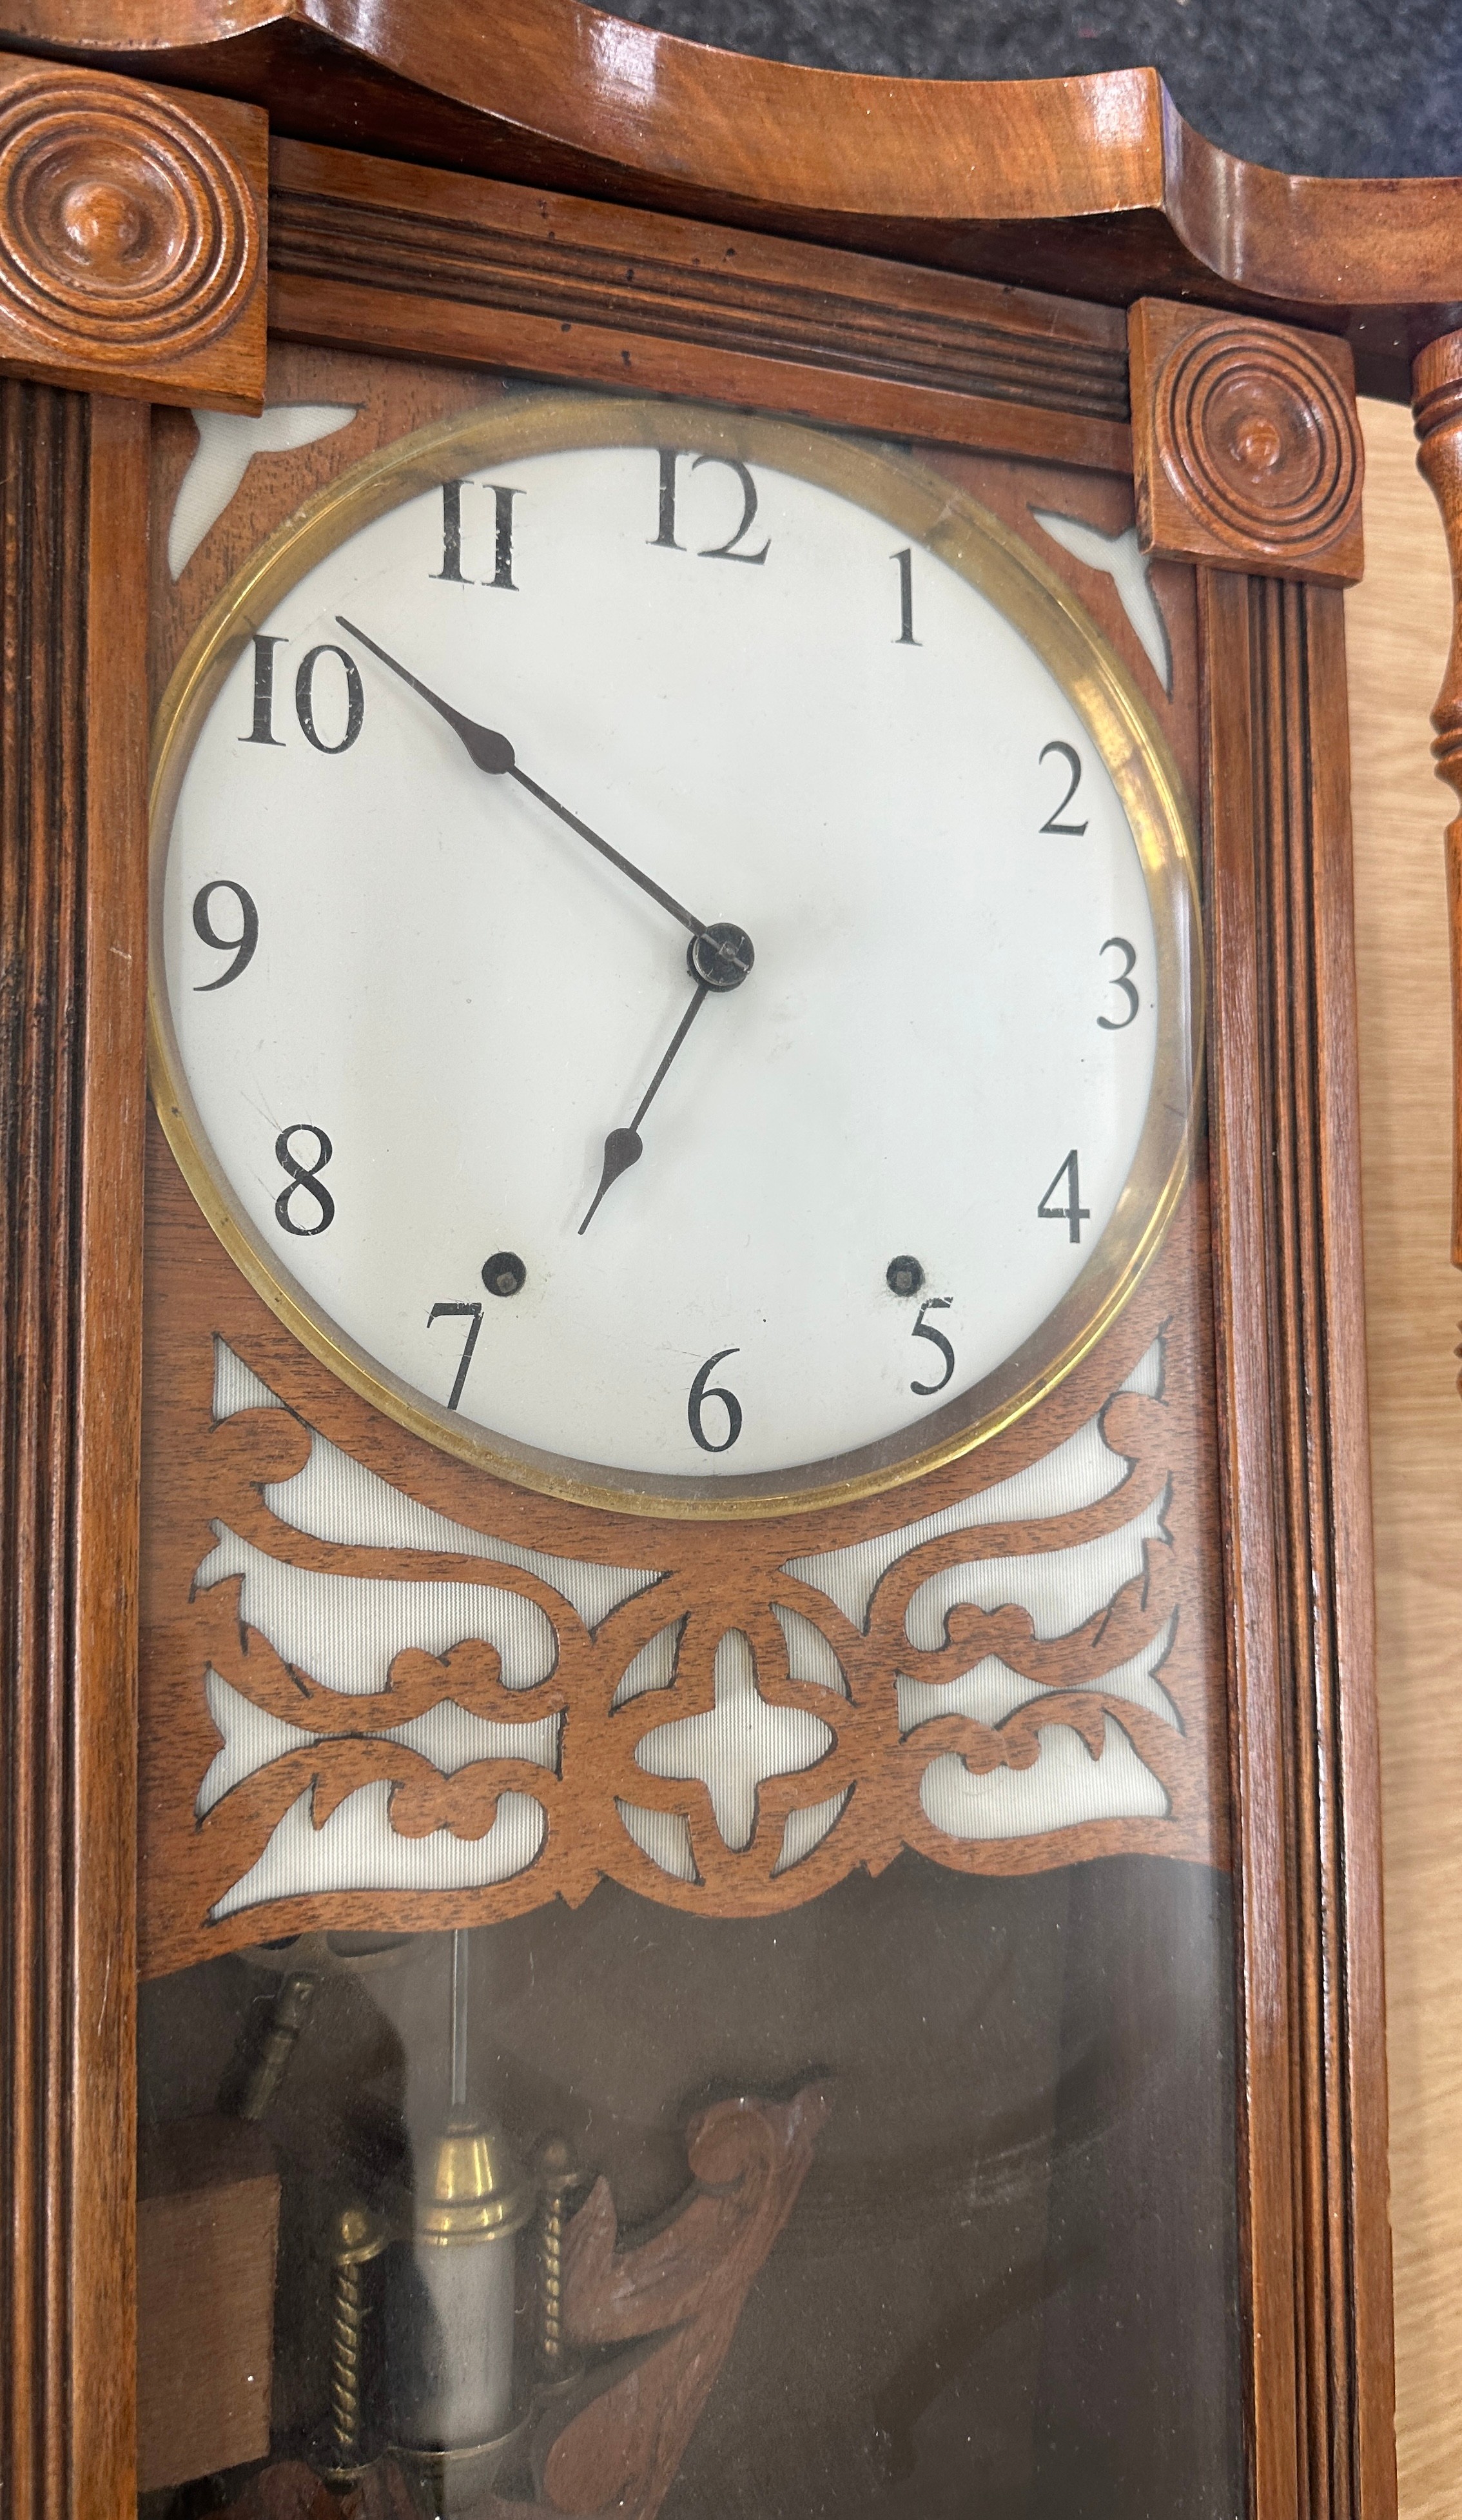 Vintage 3 Key hole wall clock, untested - Image 3 of 4